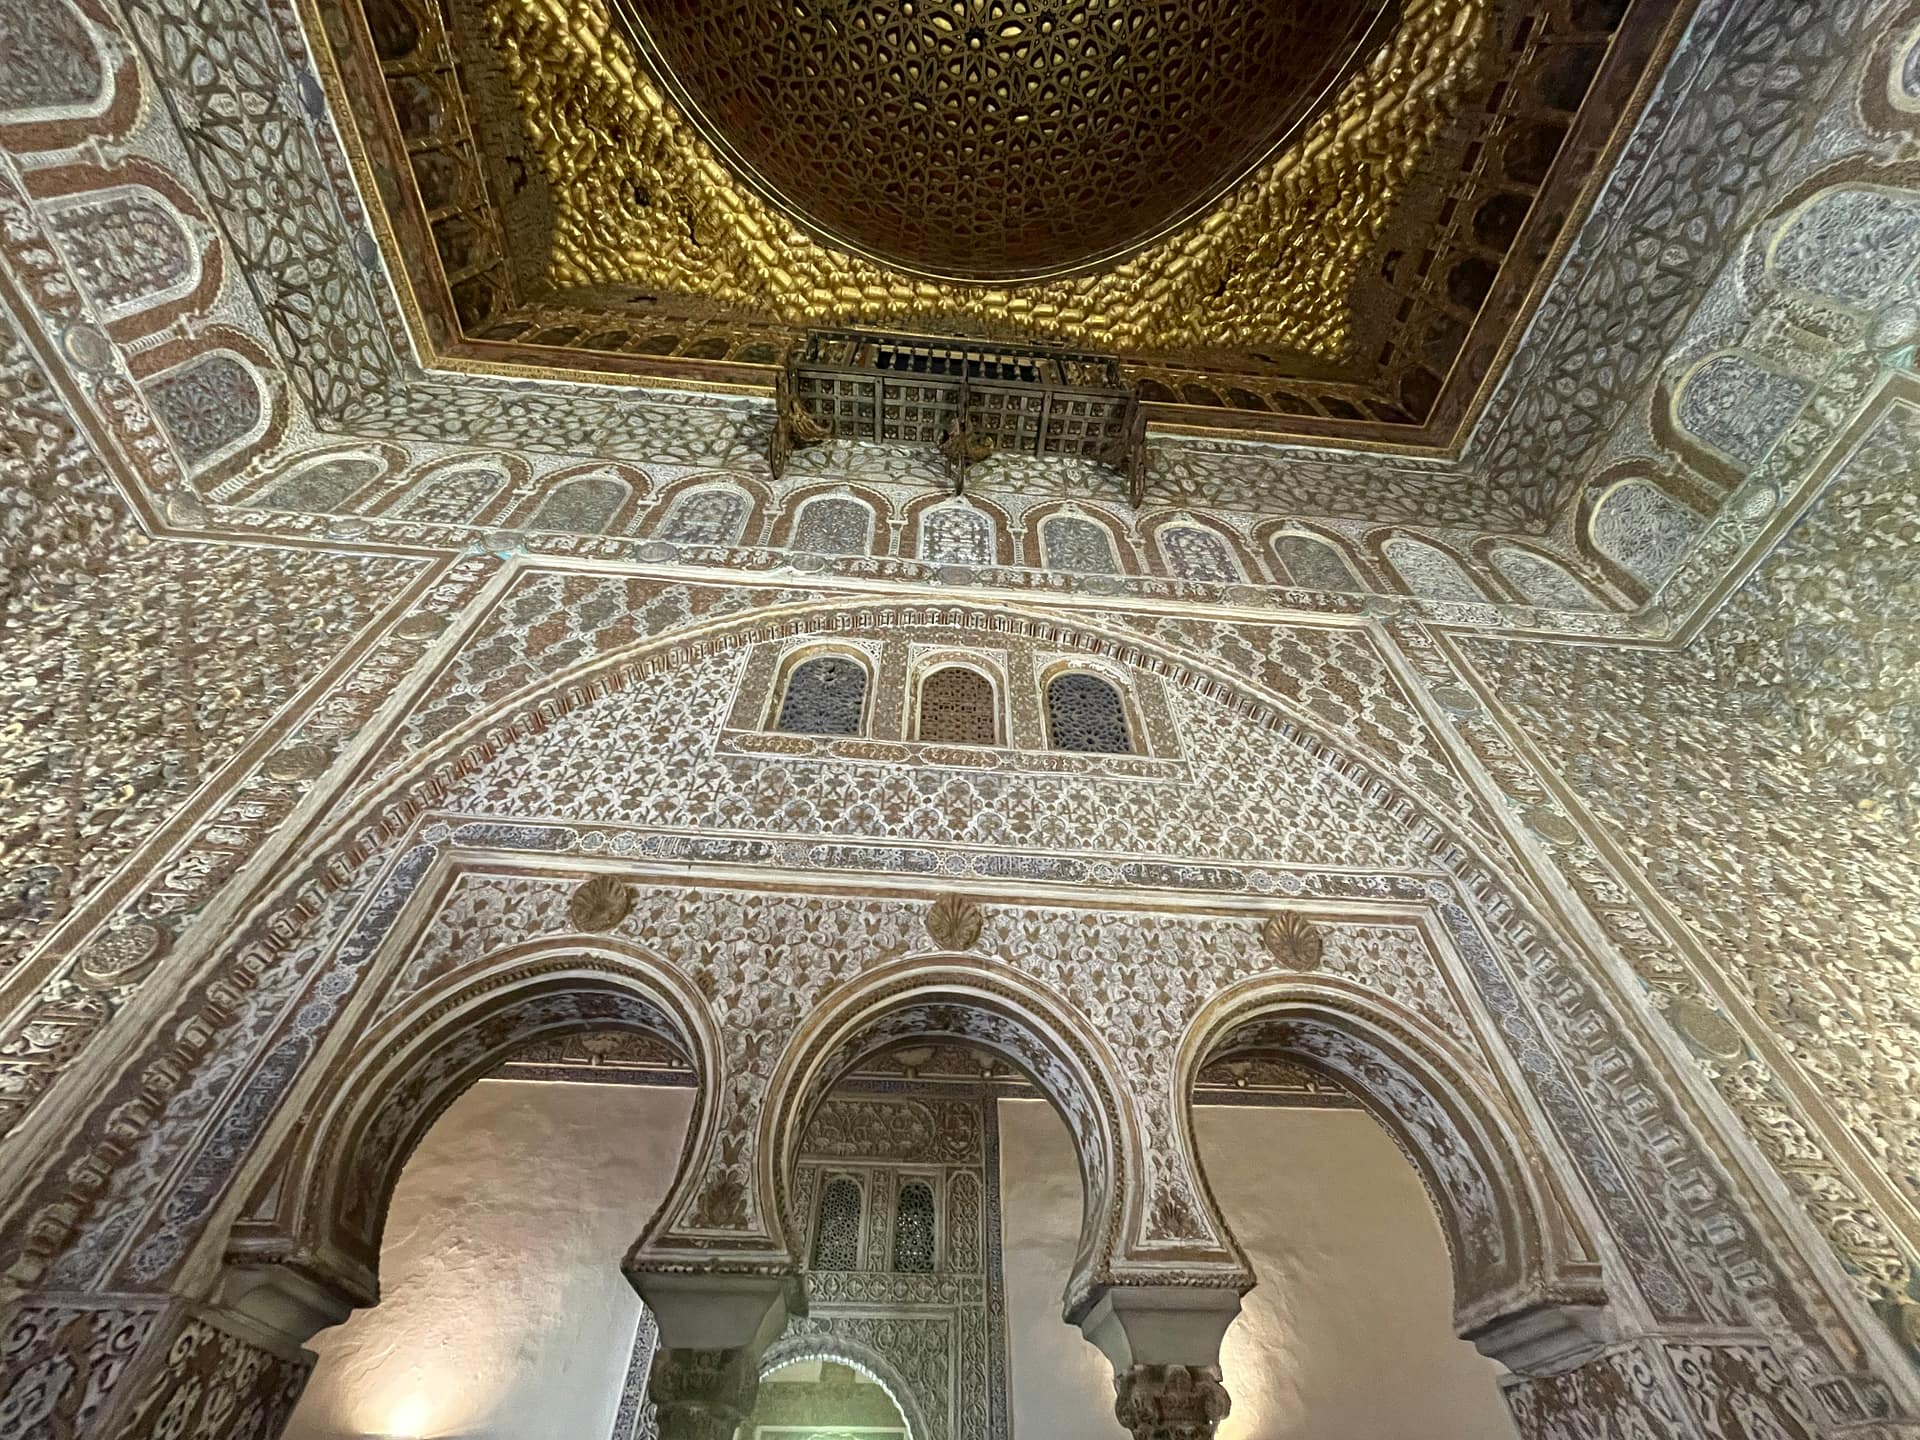 Ornate ceiling inside the Real Alcazar